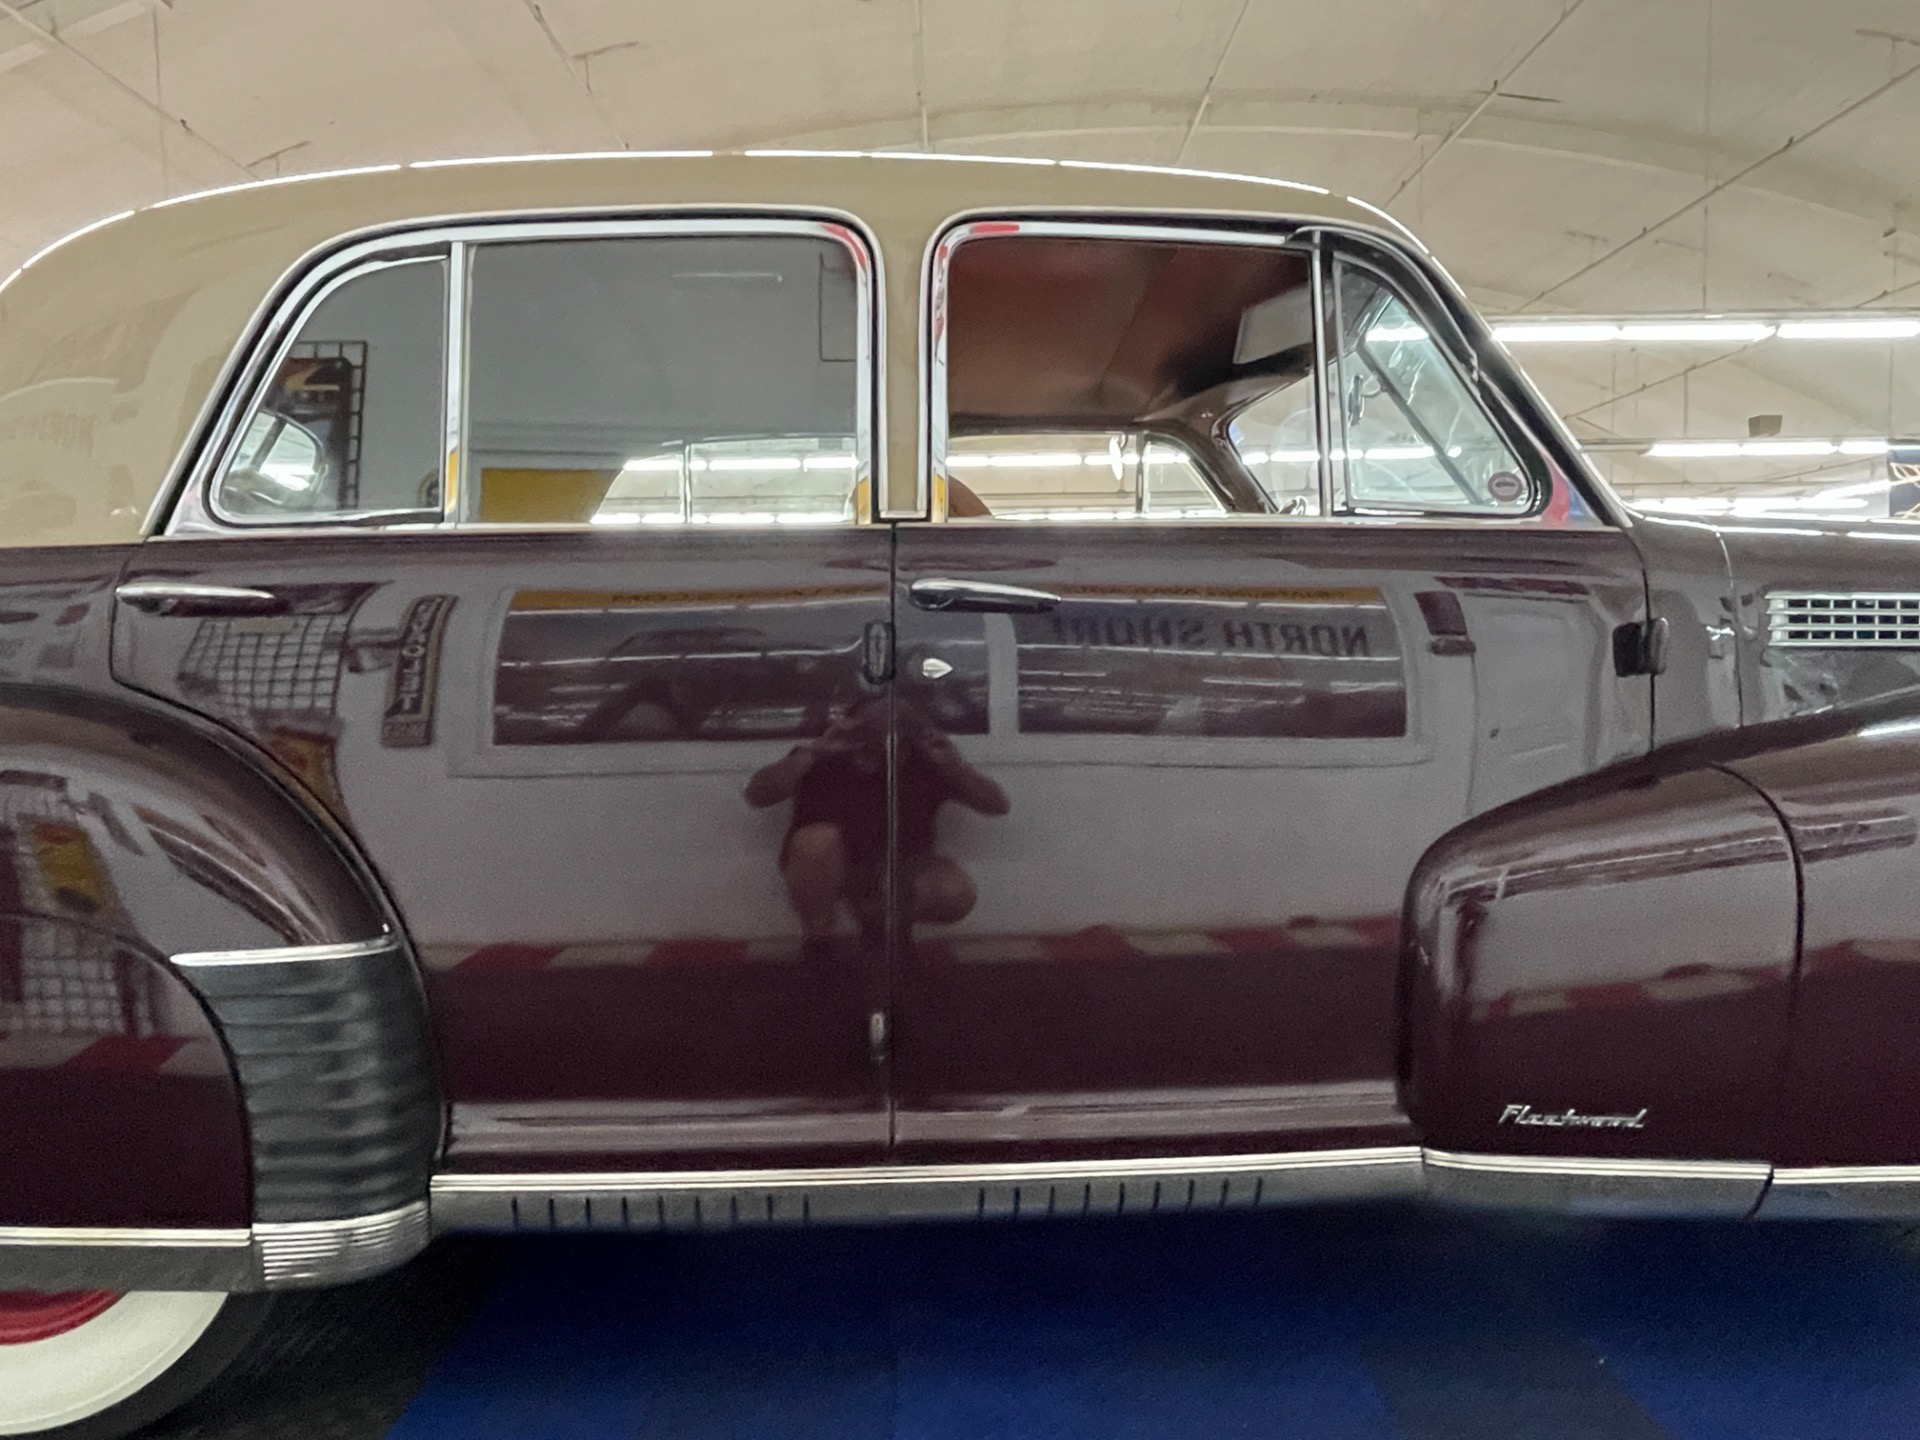 Used 1941 Cadillac Fleetwood - 4 DOOR SEDAN - HIGH QUALITY RESTORATION - SEE VIDEO | Mundelein, IL